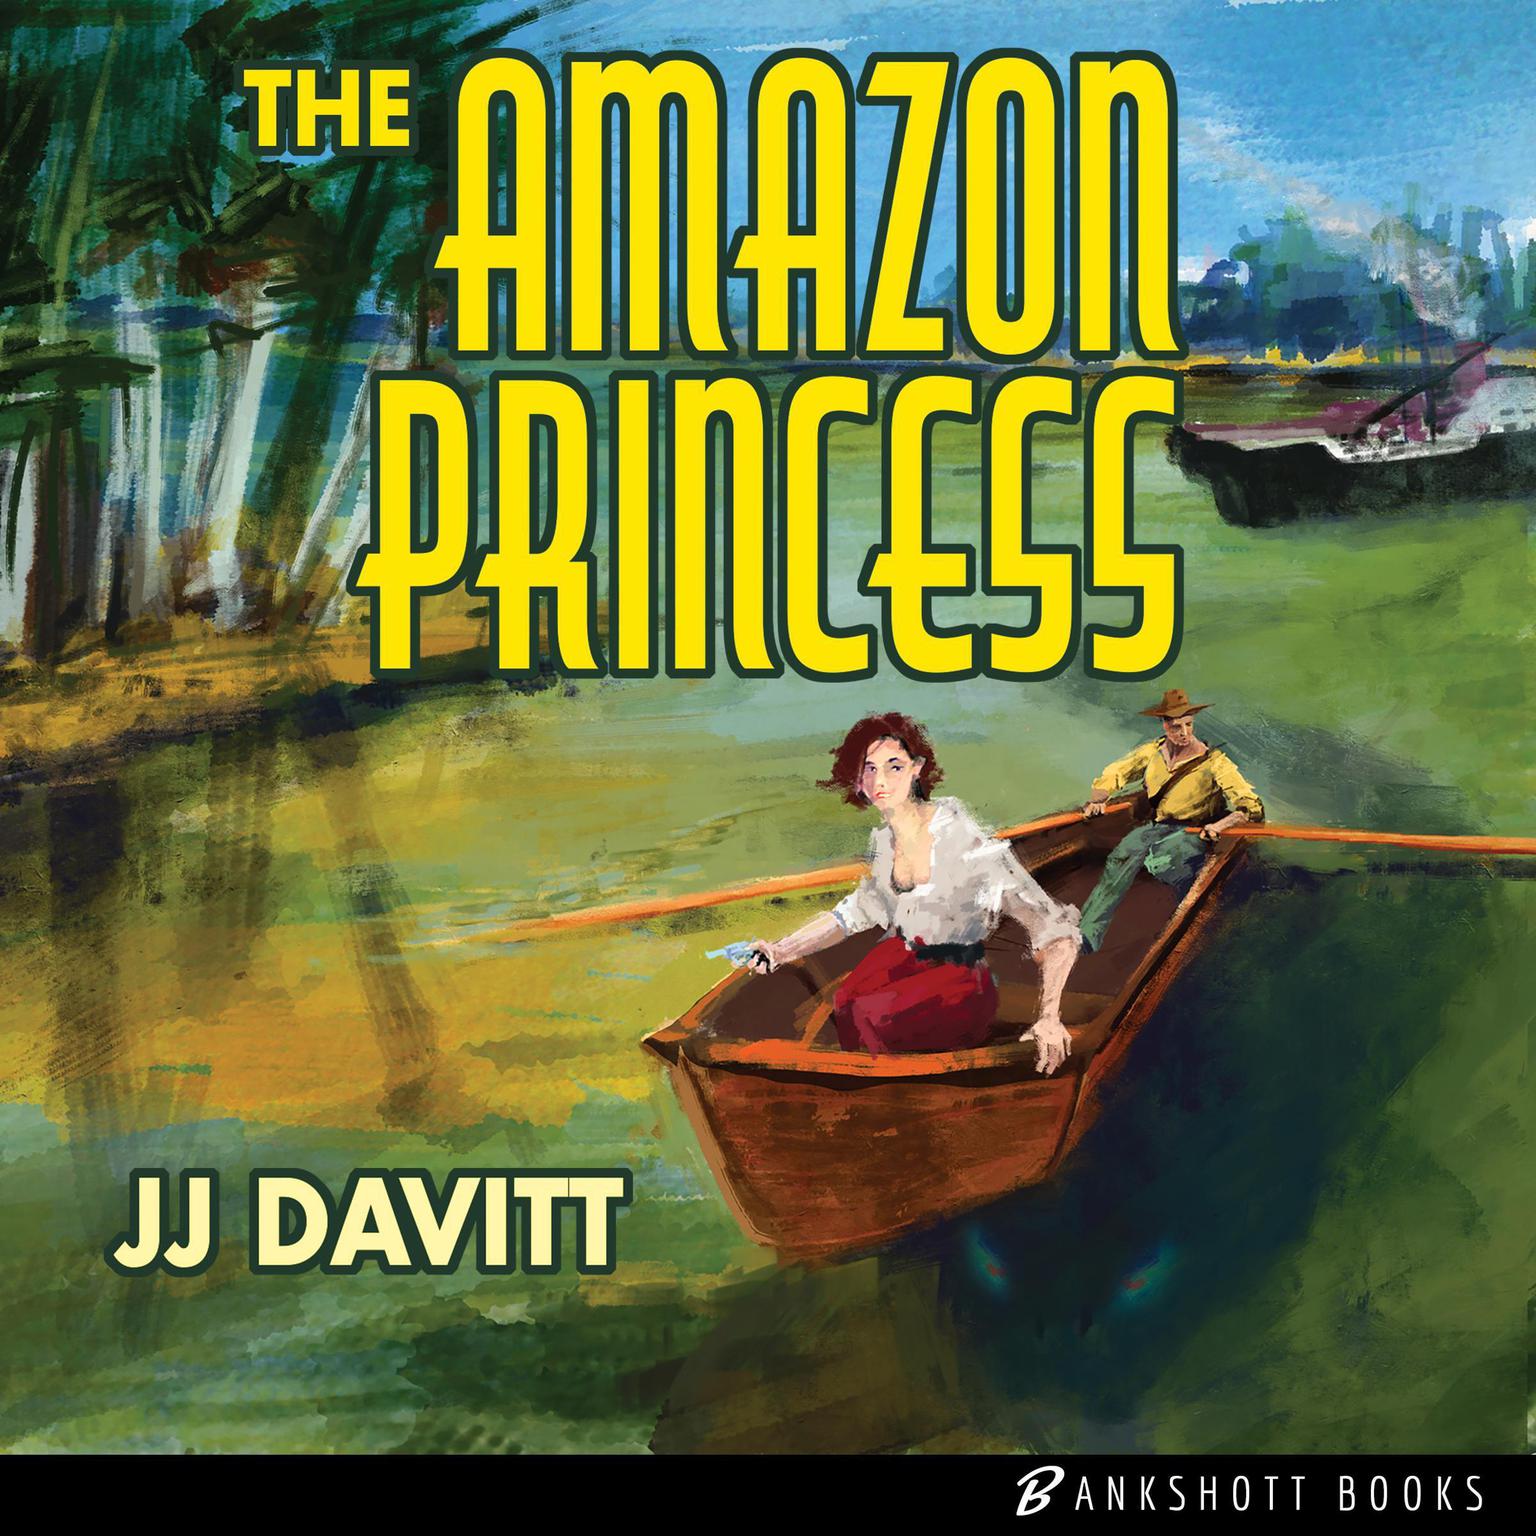 The Amazon Princess Audiobook, by J.J. Davitt